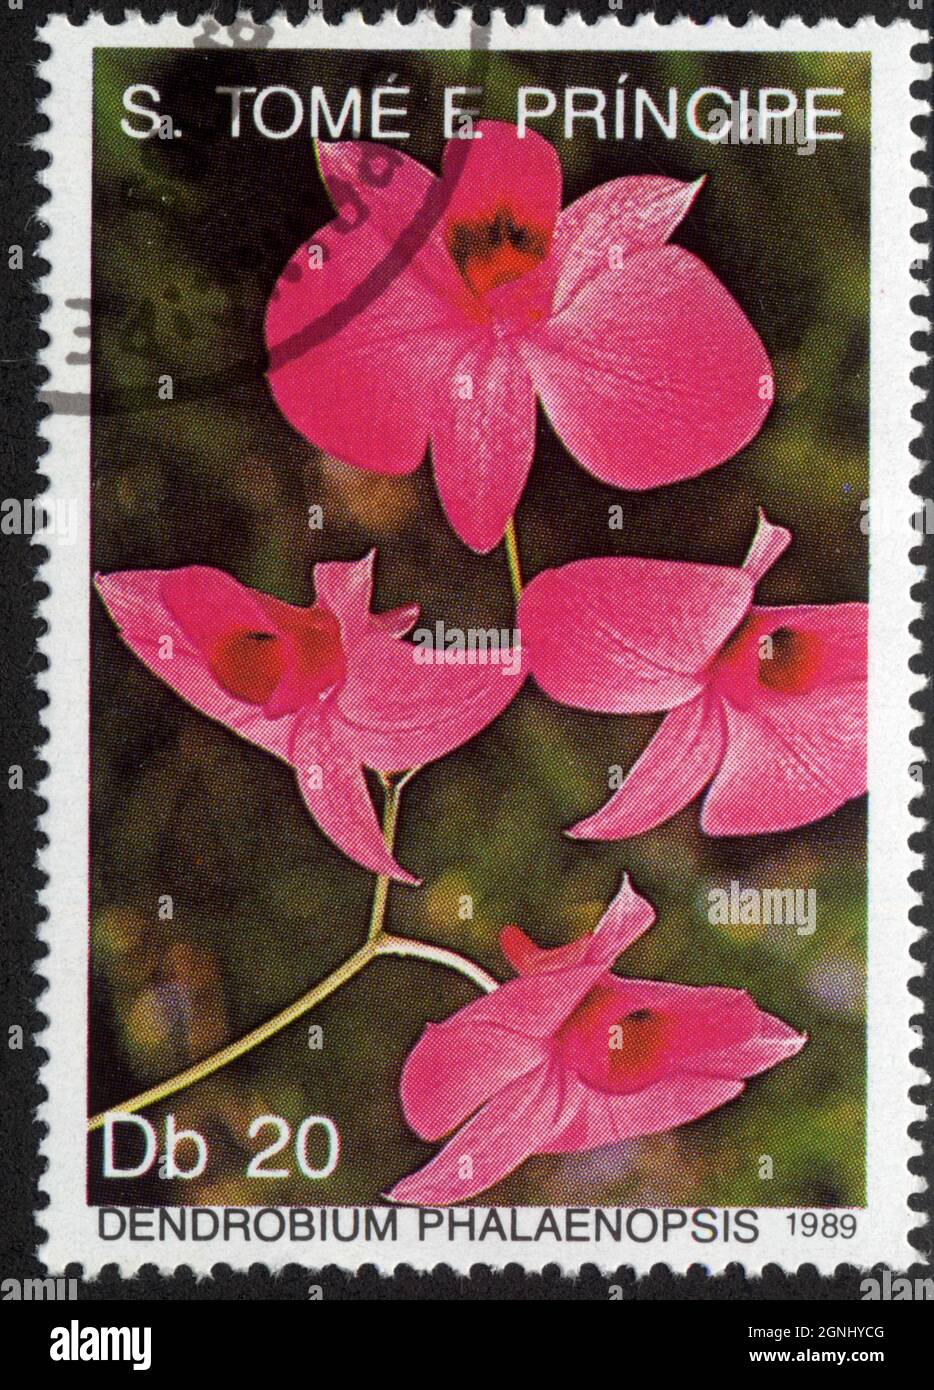 Timbre S.Tomé e Principe. Dendrobium phalaenopsis. DB 20. 1989 Stock Photo